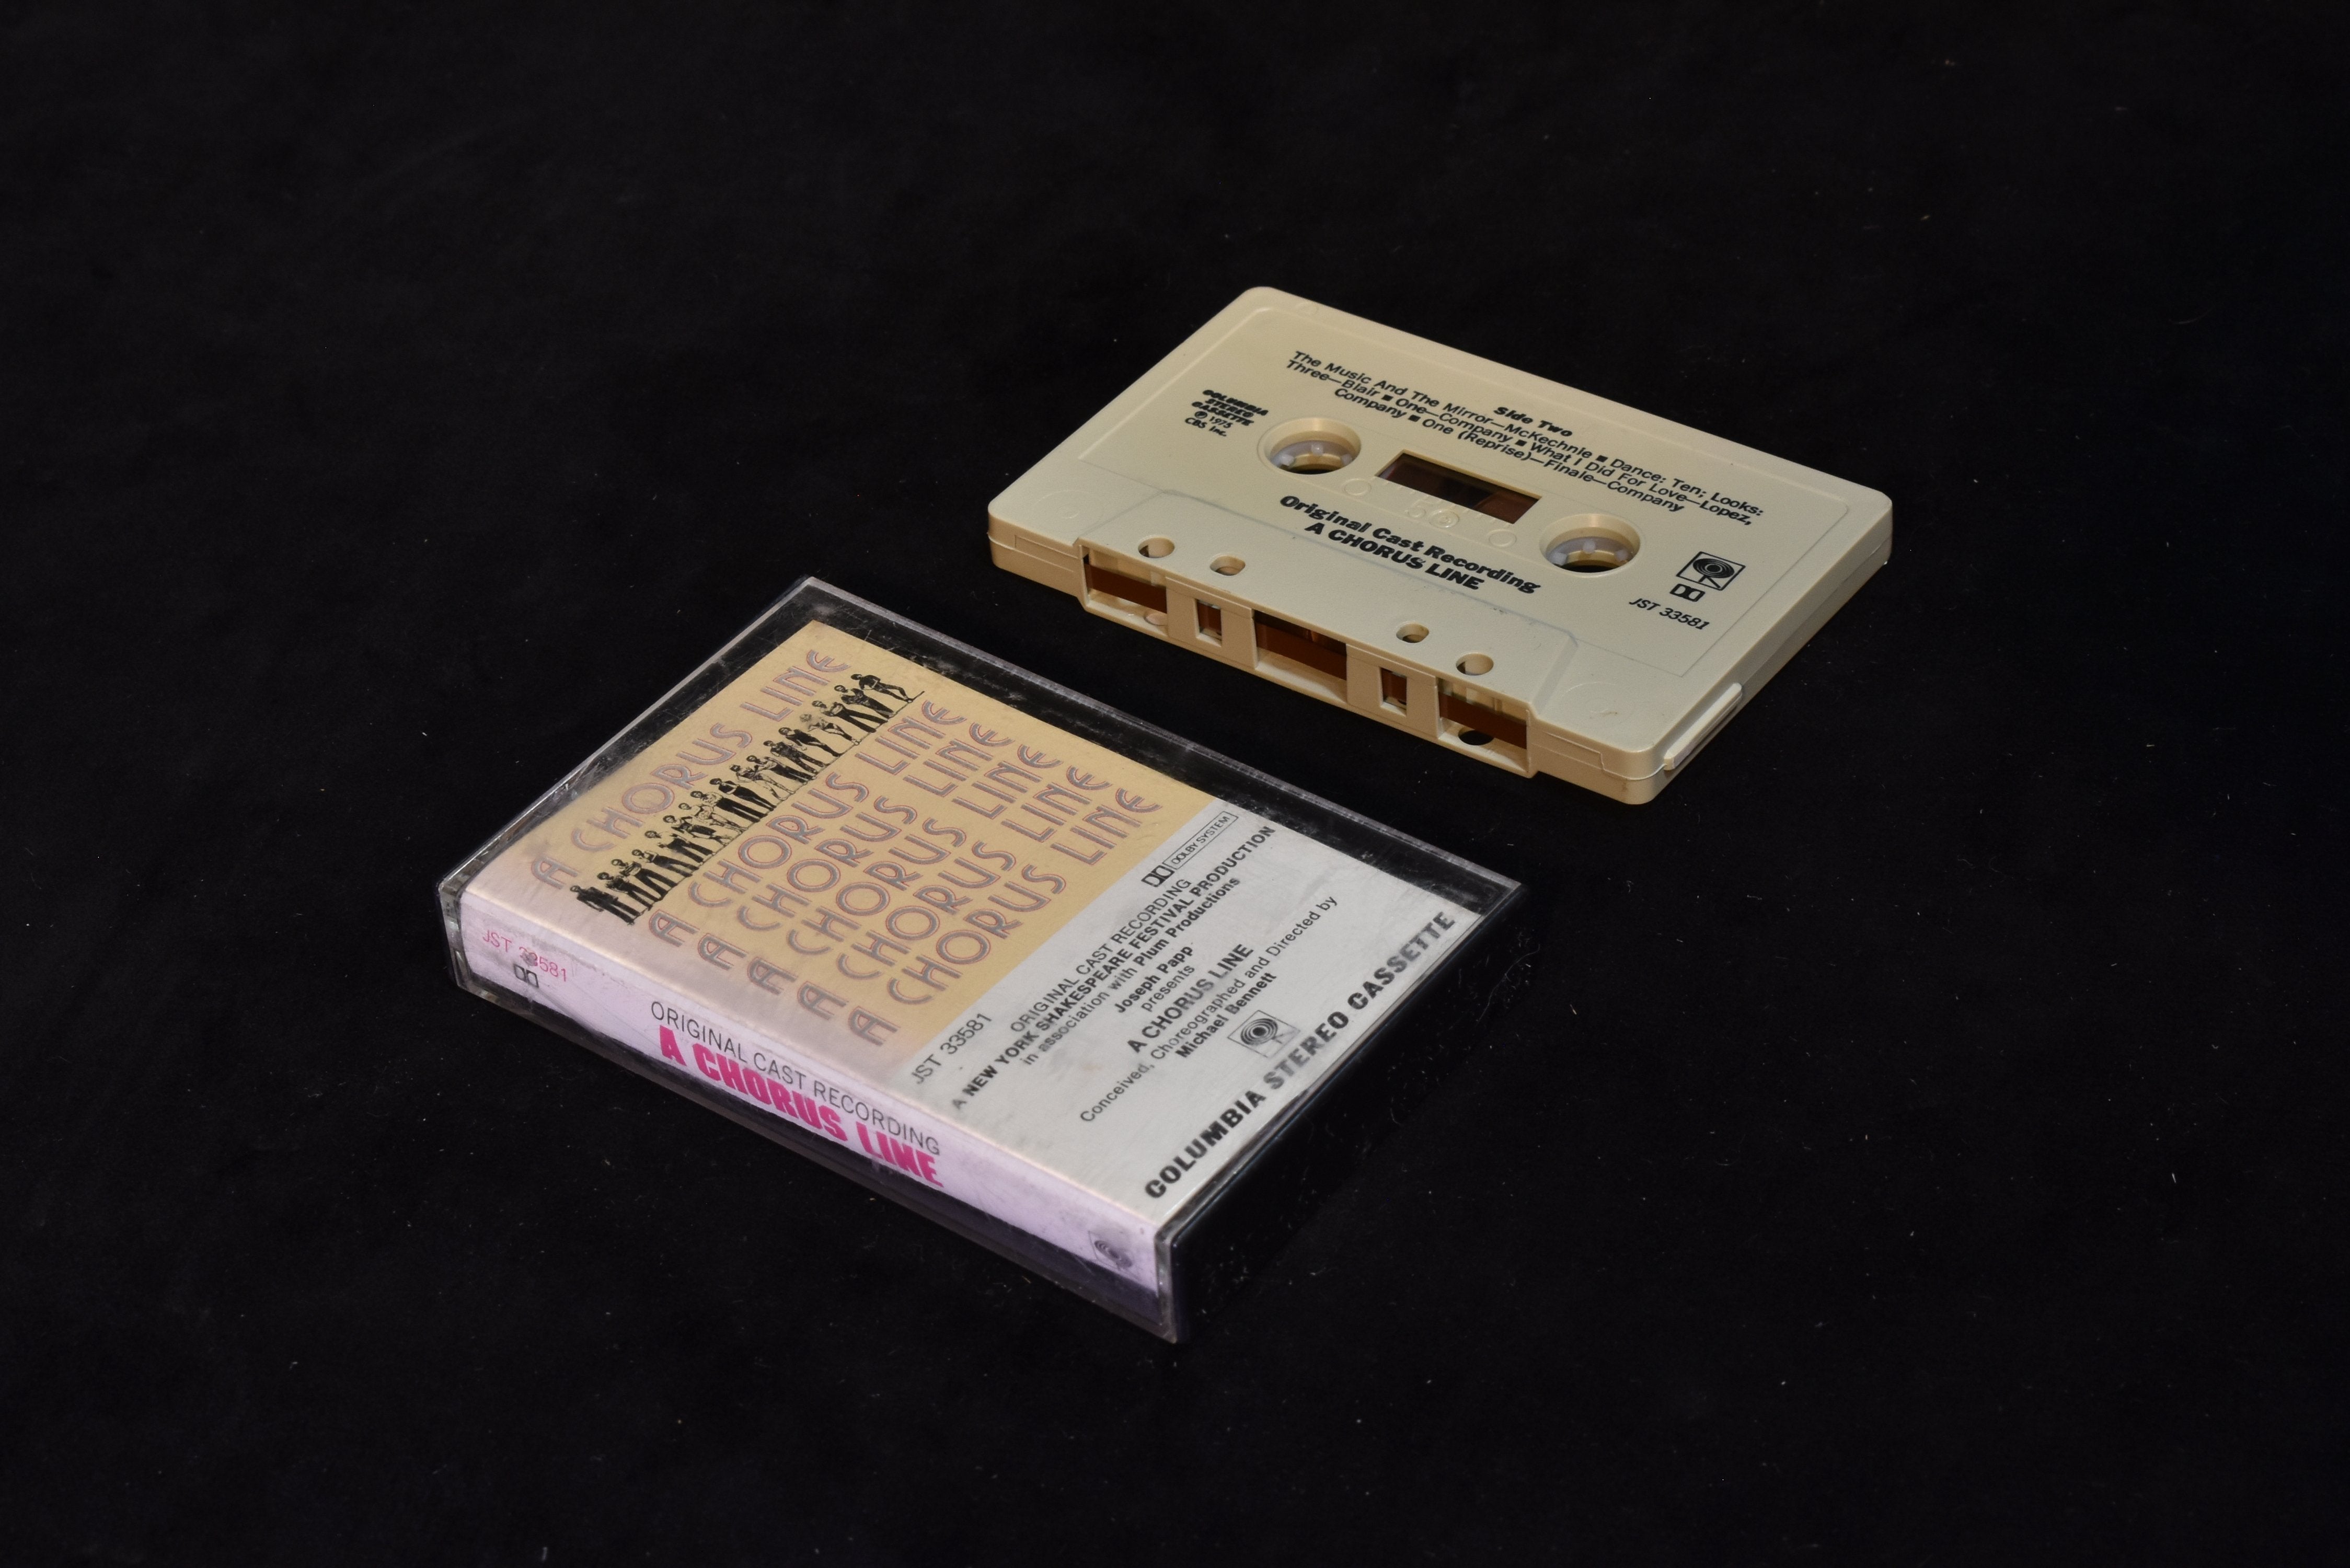 A chorus line cassette tape used